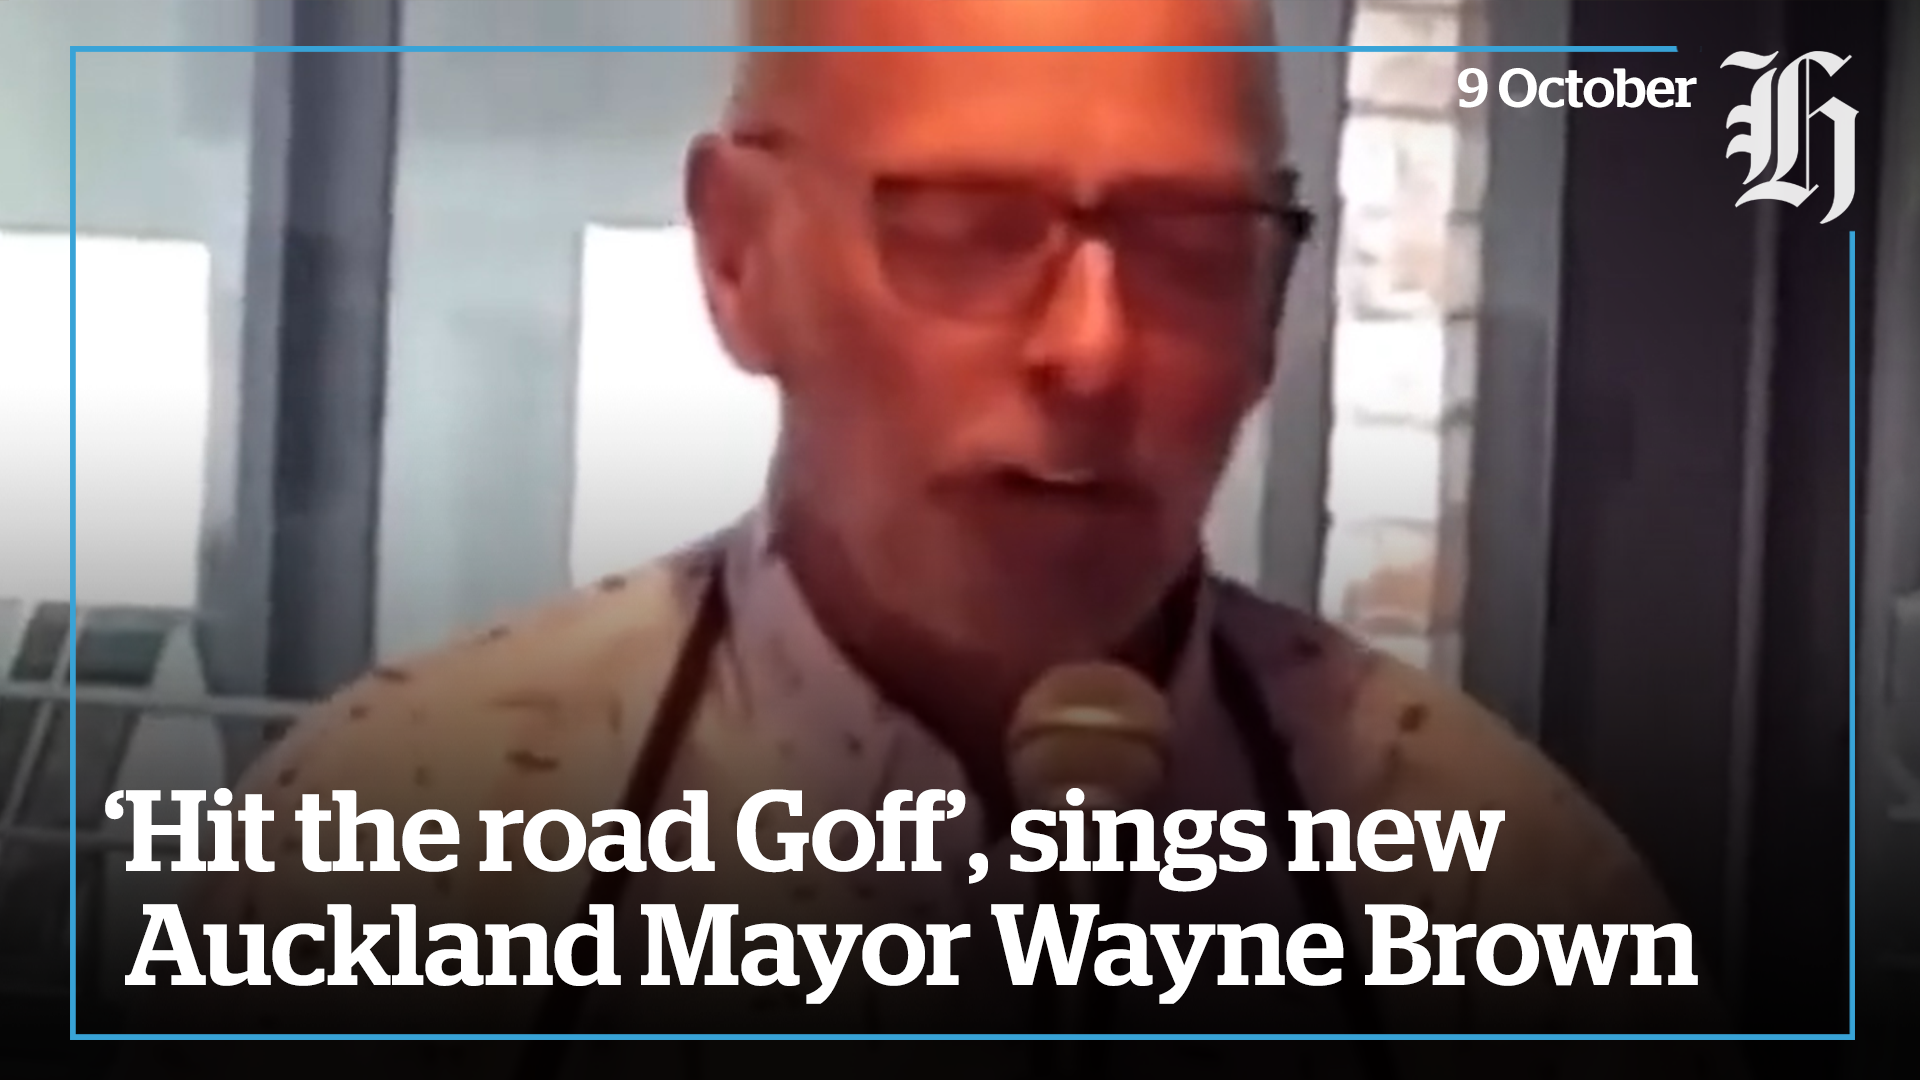 New Auckland Mayor Wayne Brown sings 'hit the road Goff' following